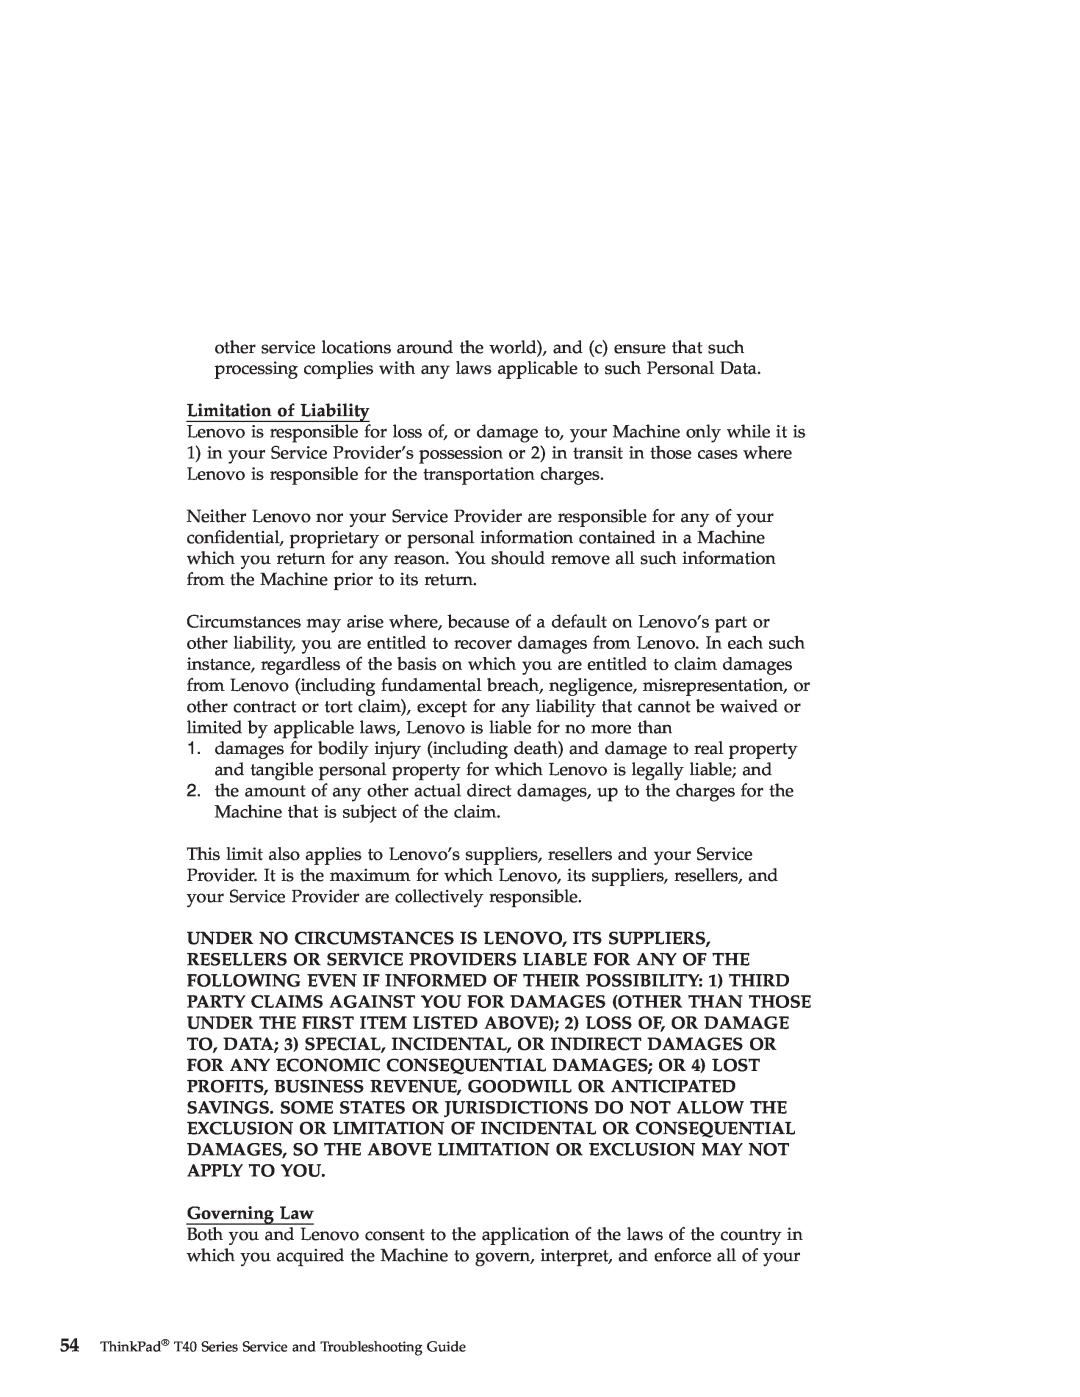 Lenovo T40 manual Limitation of Liability, Governing Law 